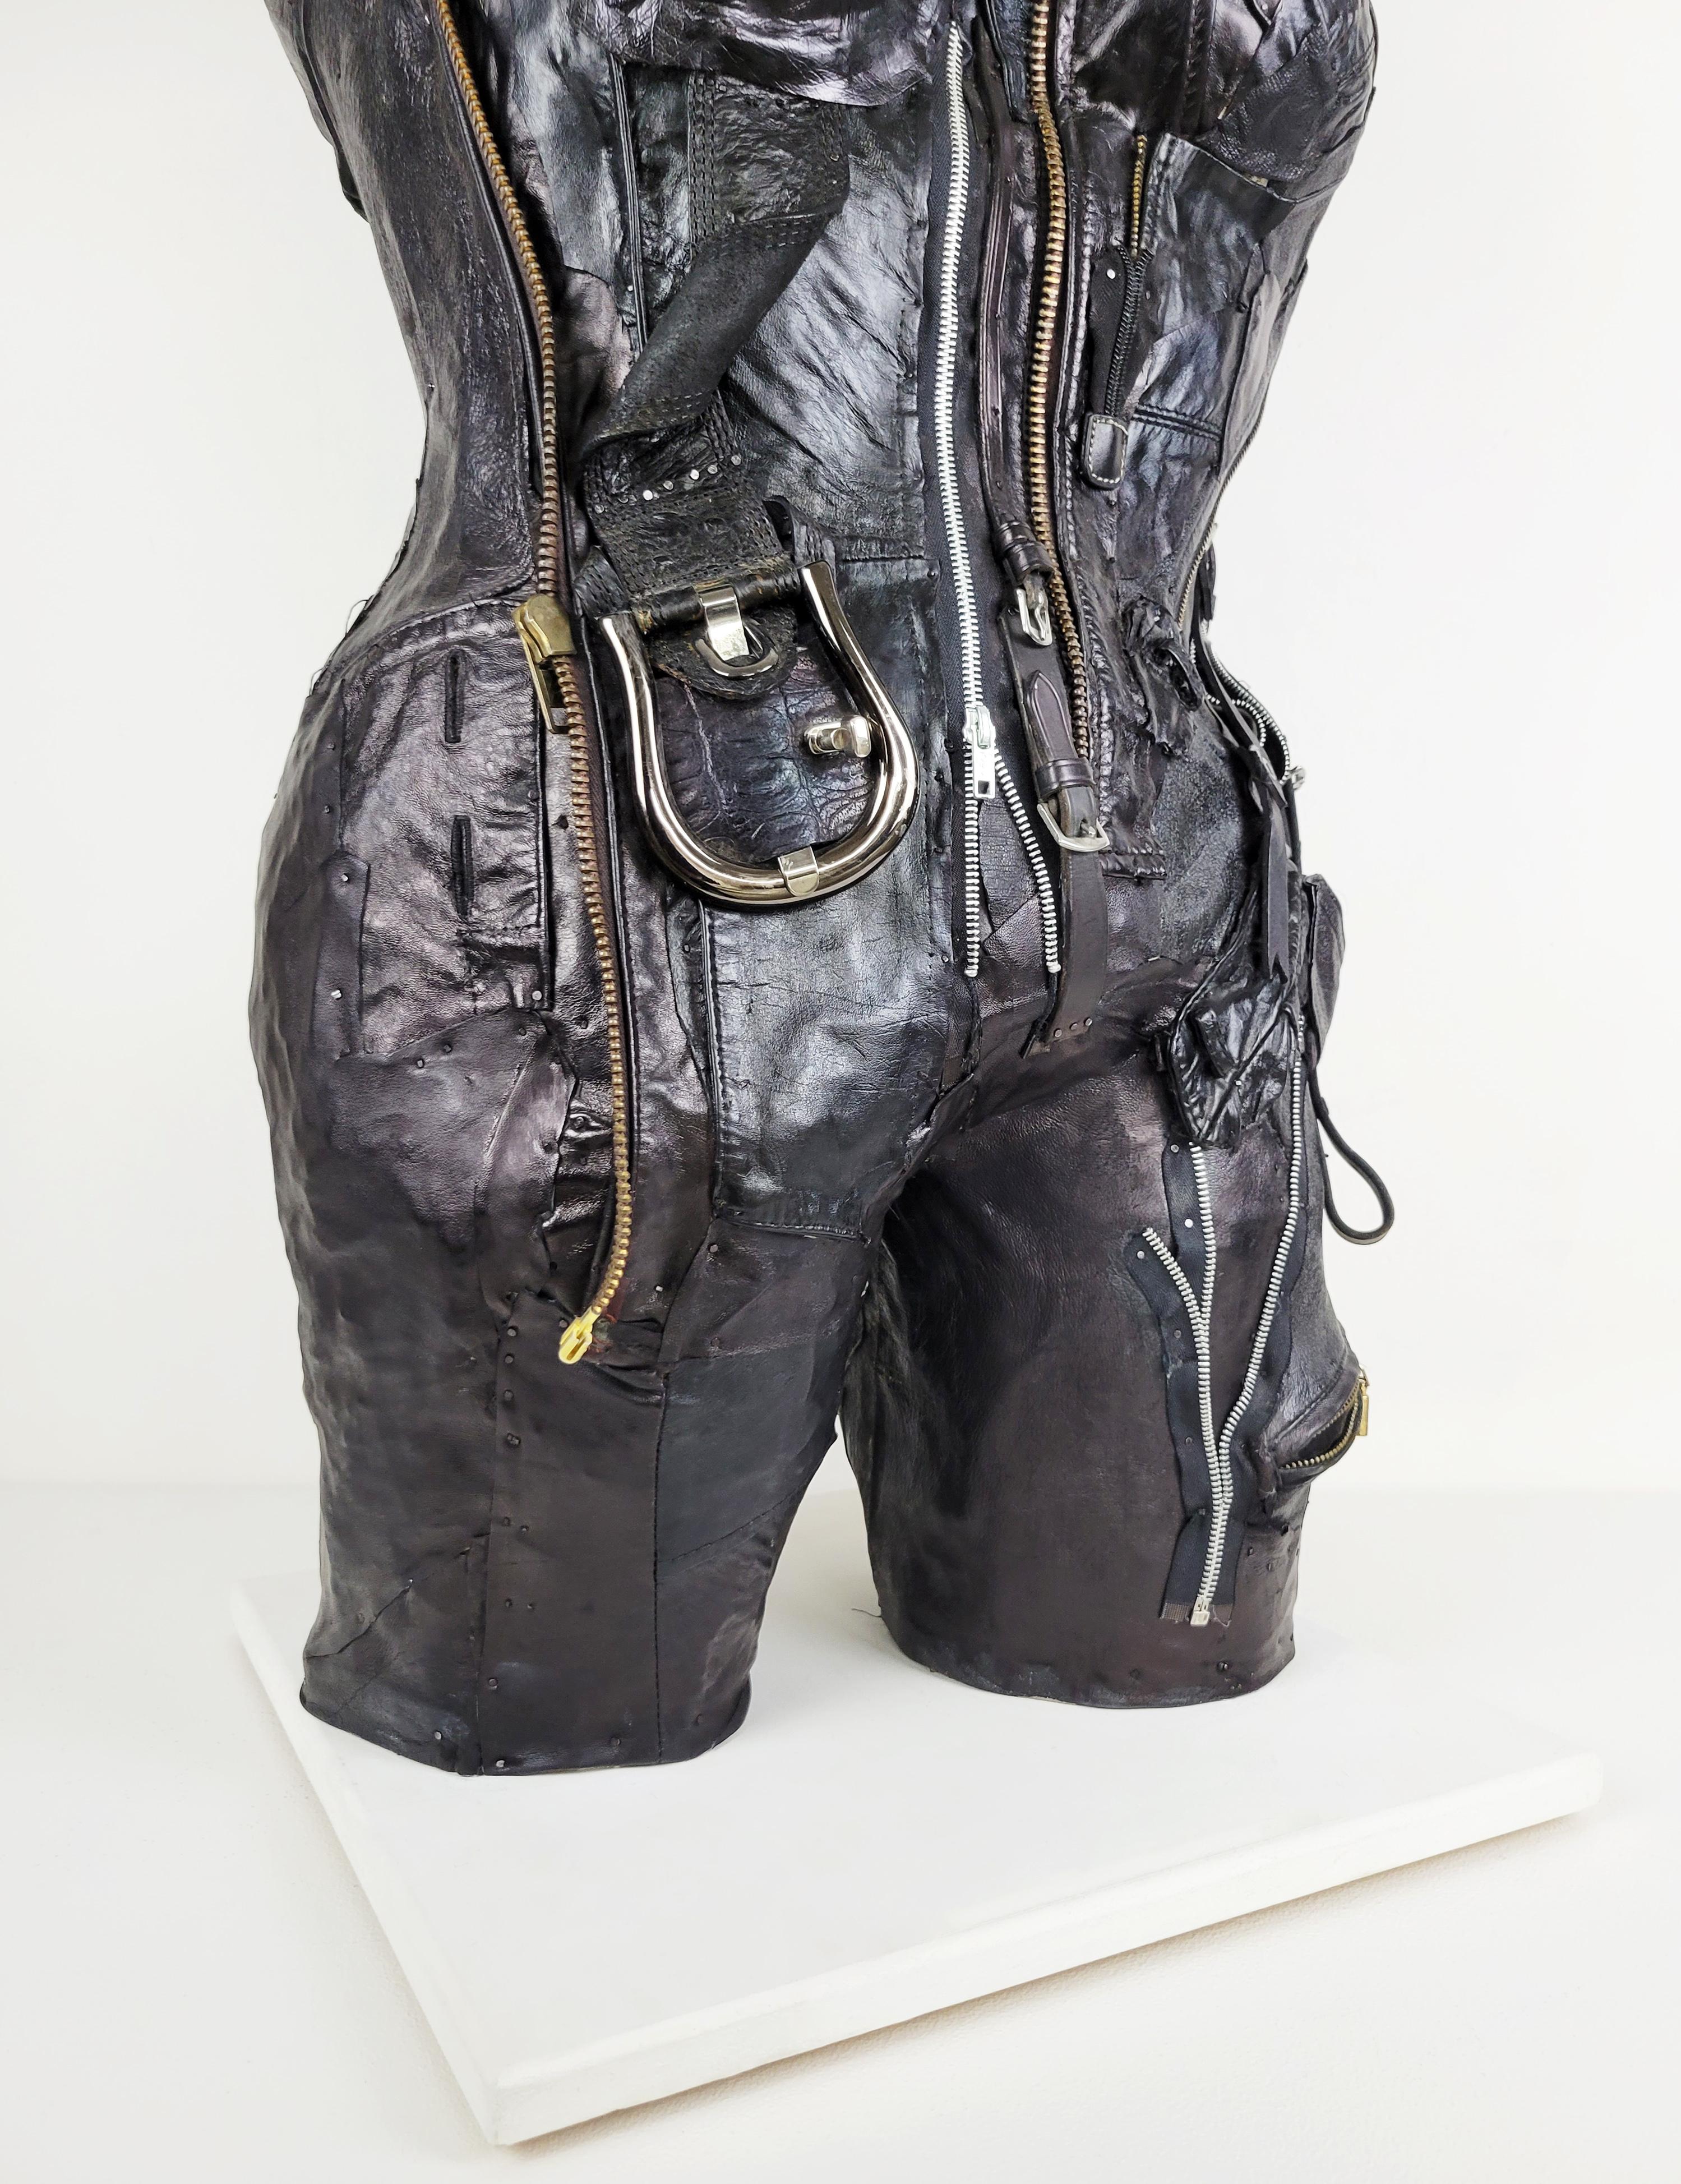 Feminist Contemporary Black/Silver Leather Metal Torso Sculpture - On Alert 691  For Sale 6